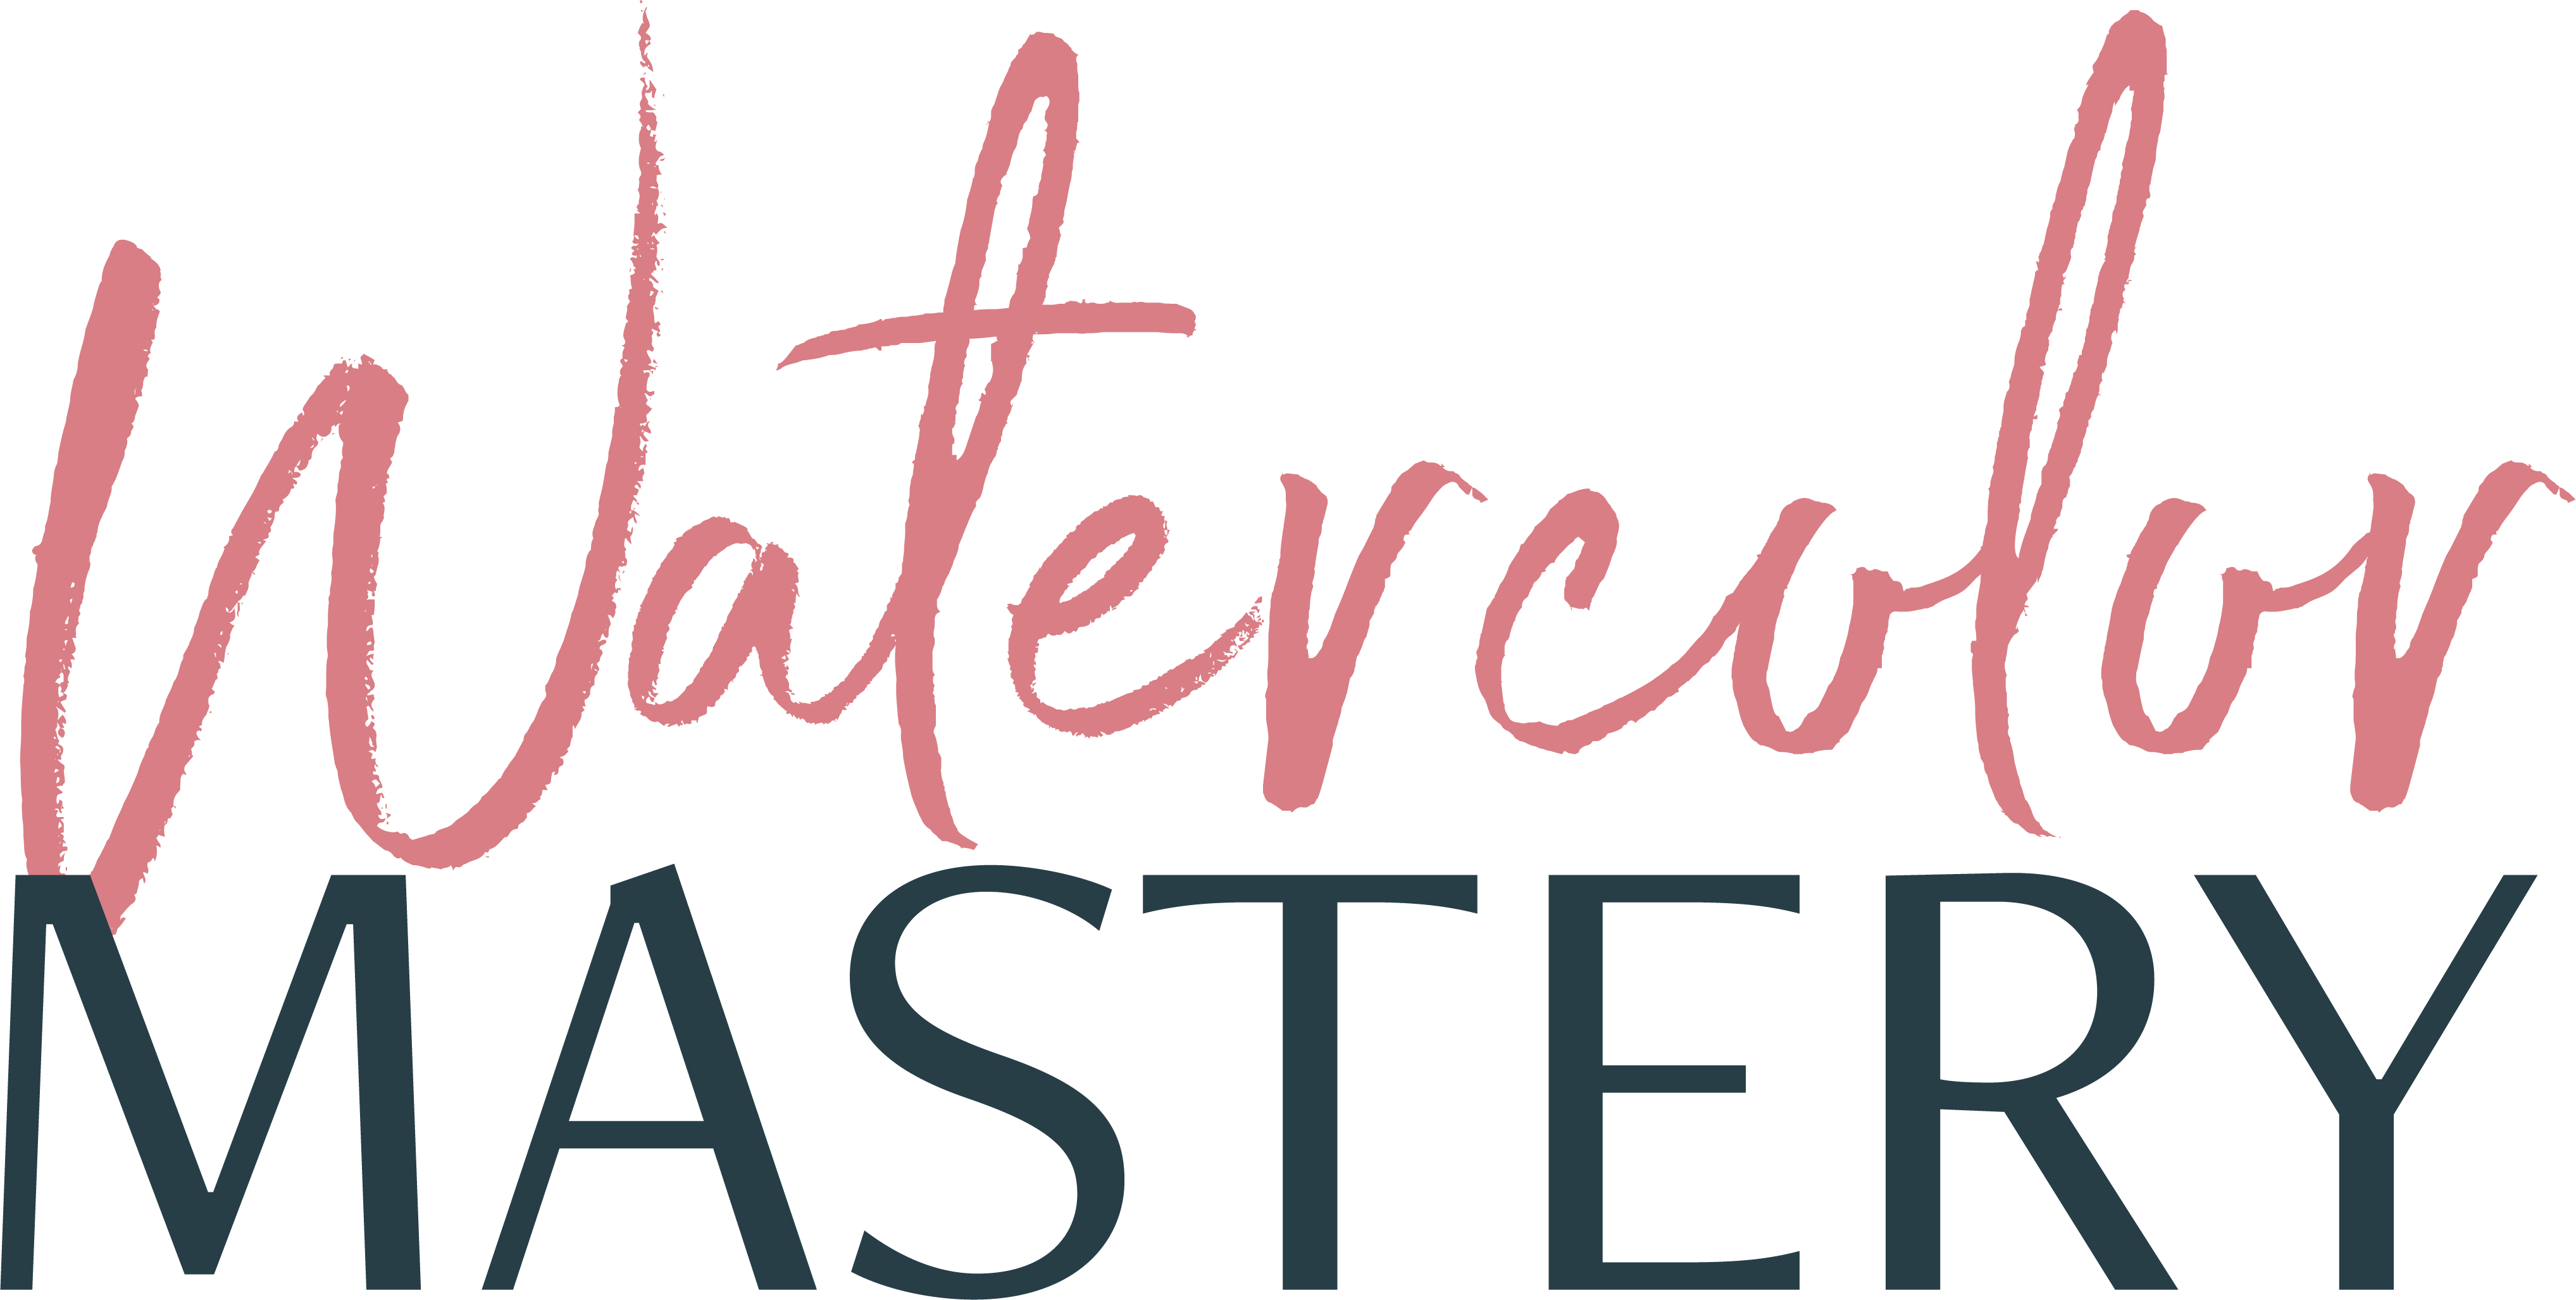 Watercolor Mastery logo